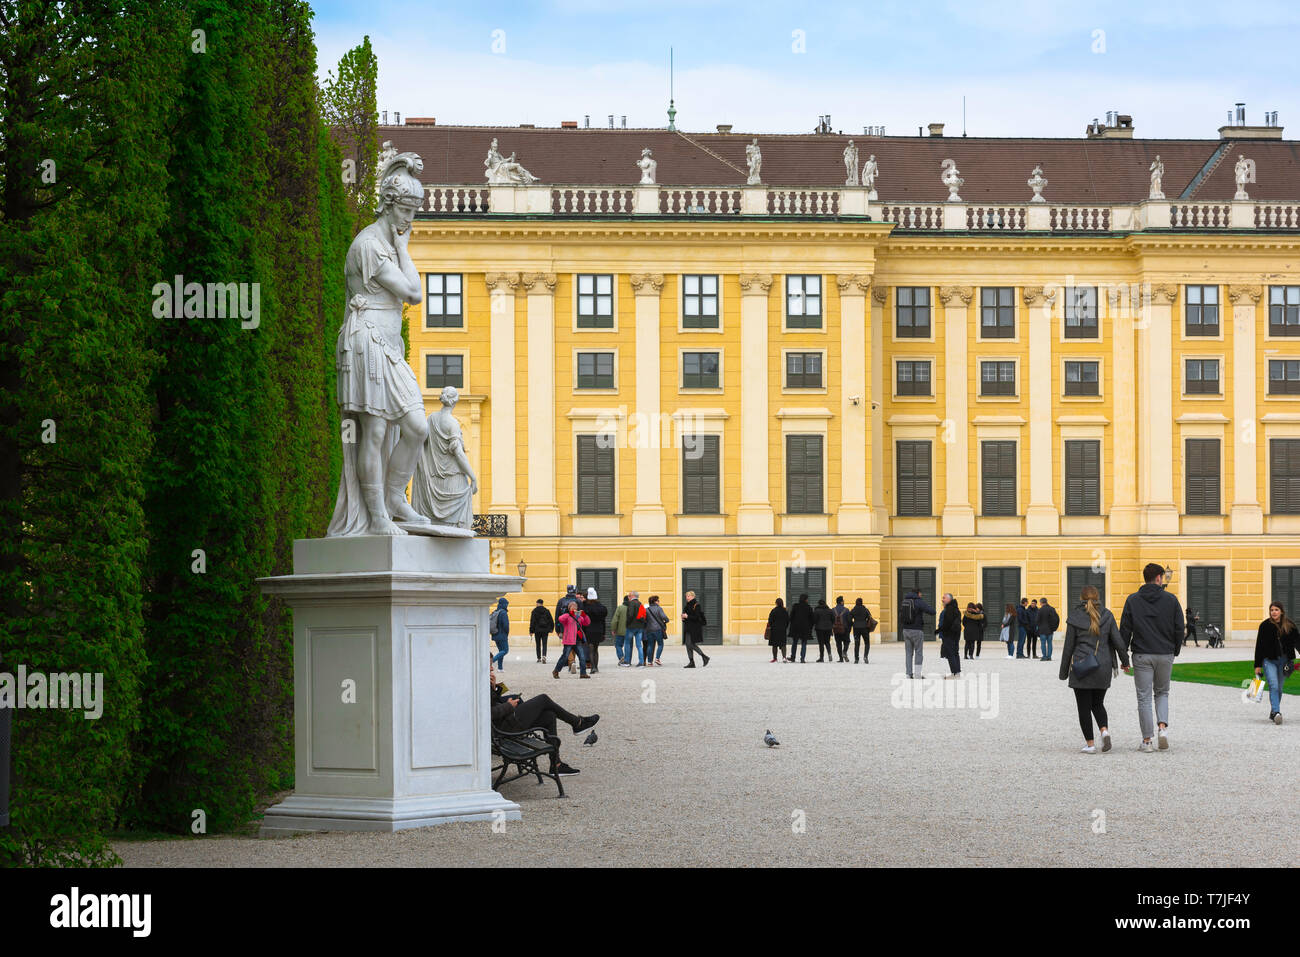 Schonbrunn garden, view of people walking along a tree-lined path in the gardens of the Schloss Schönbrunn in Vienna, Austria. Stock Photo